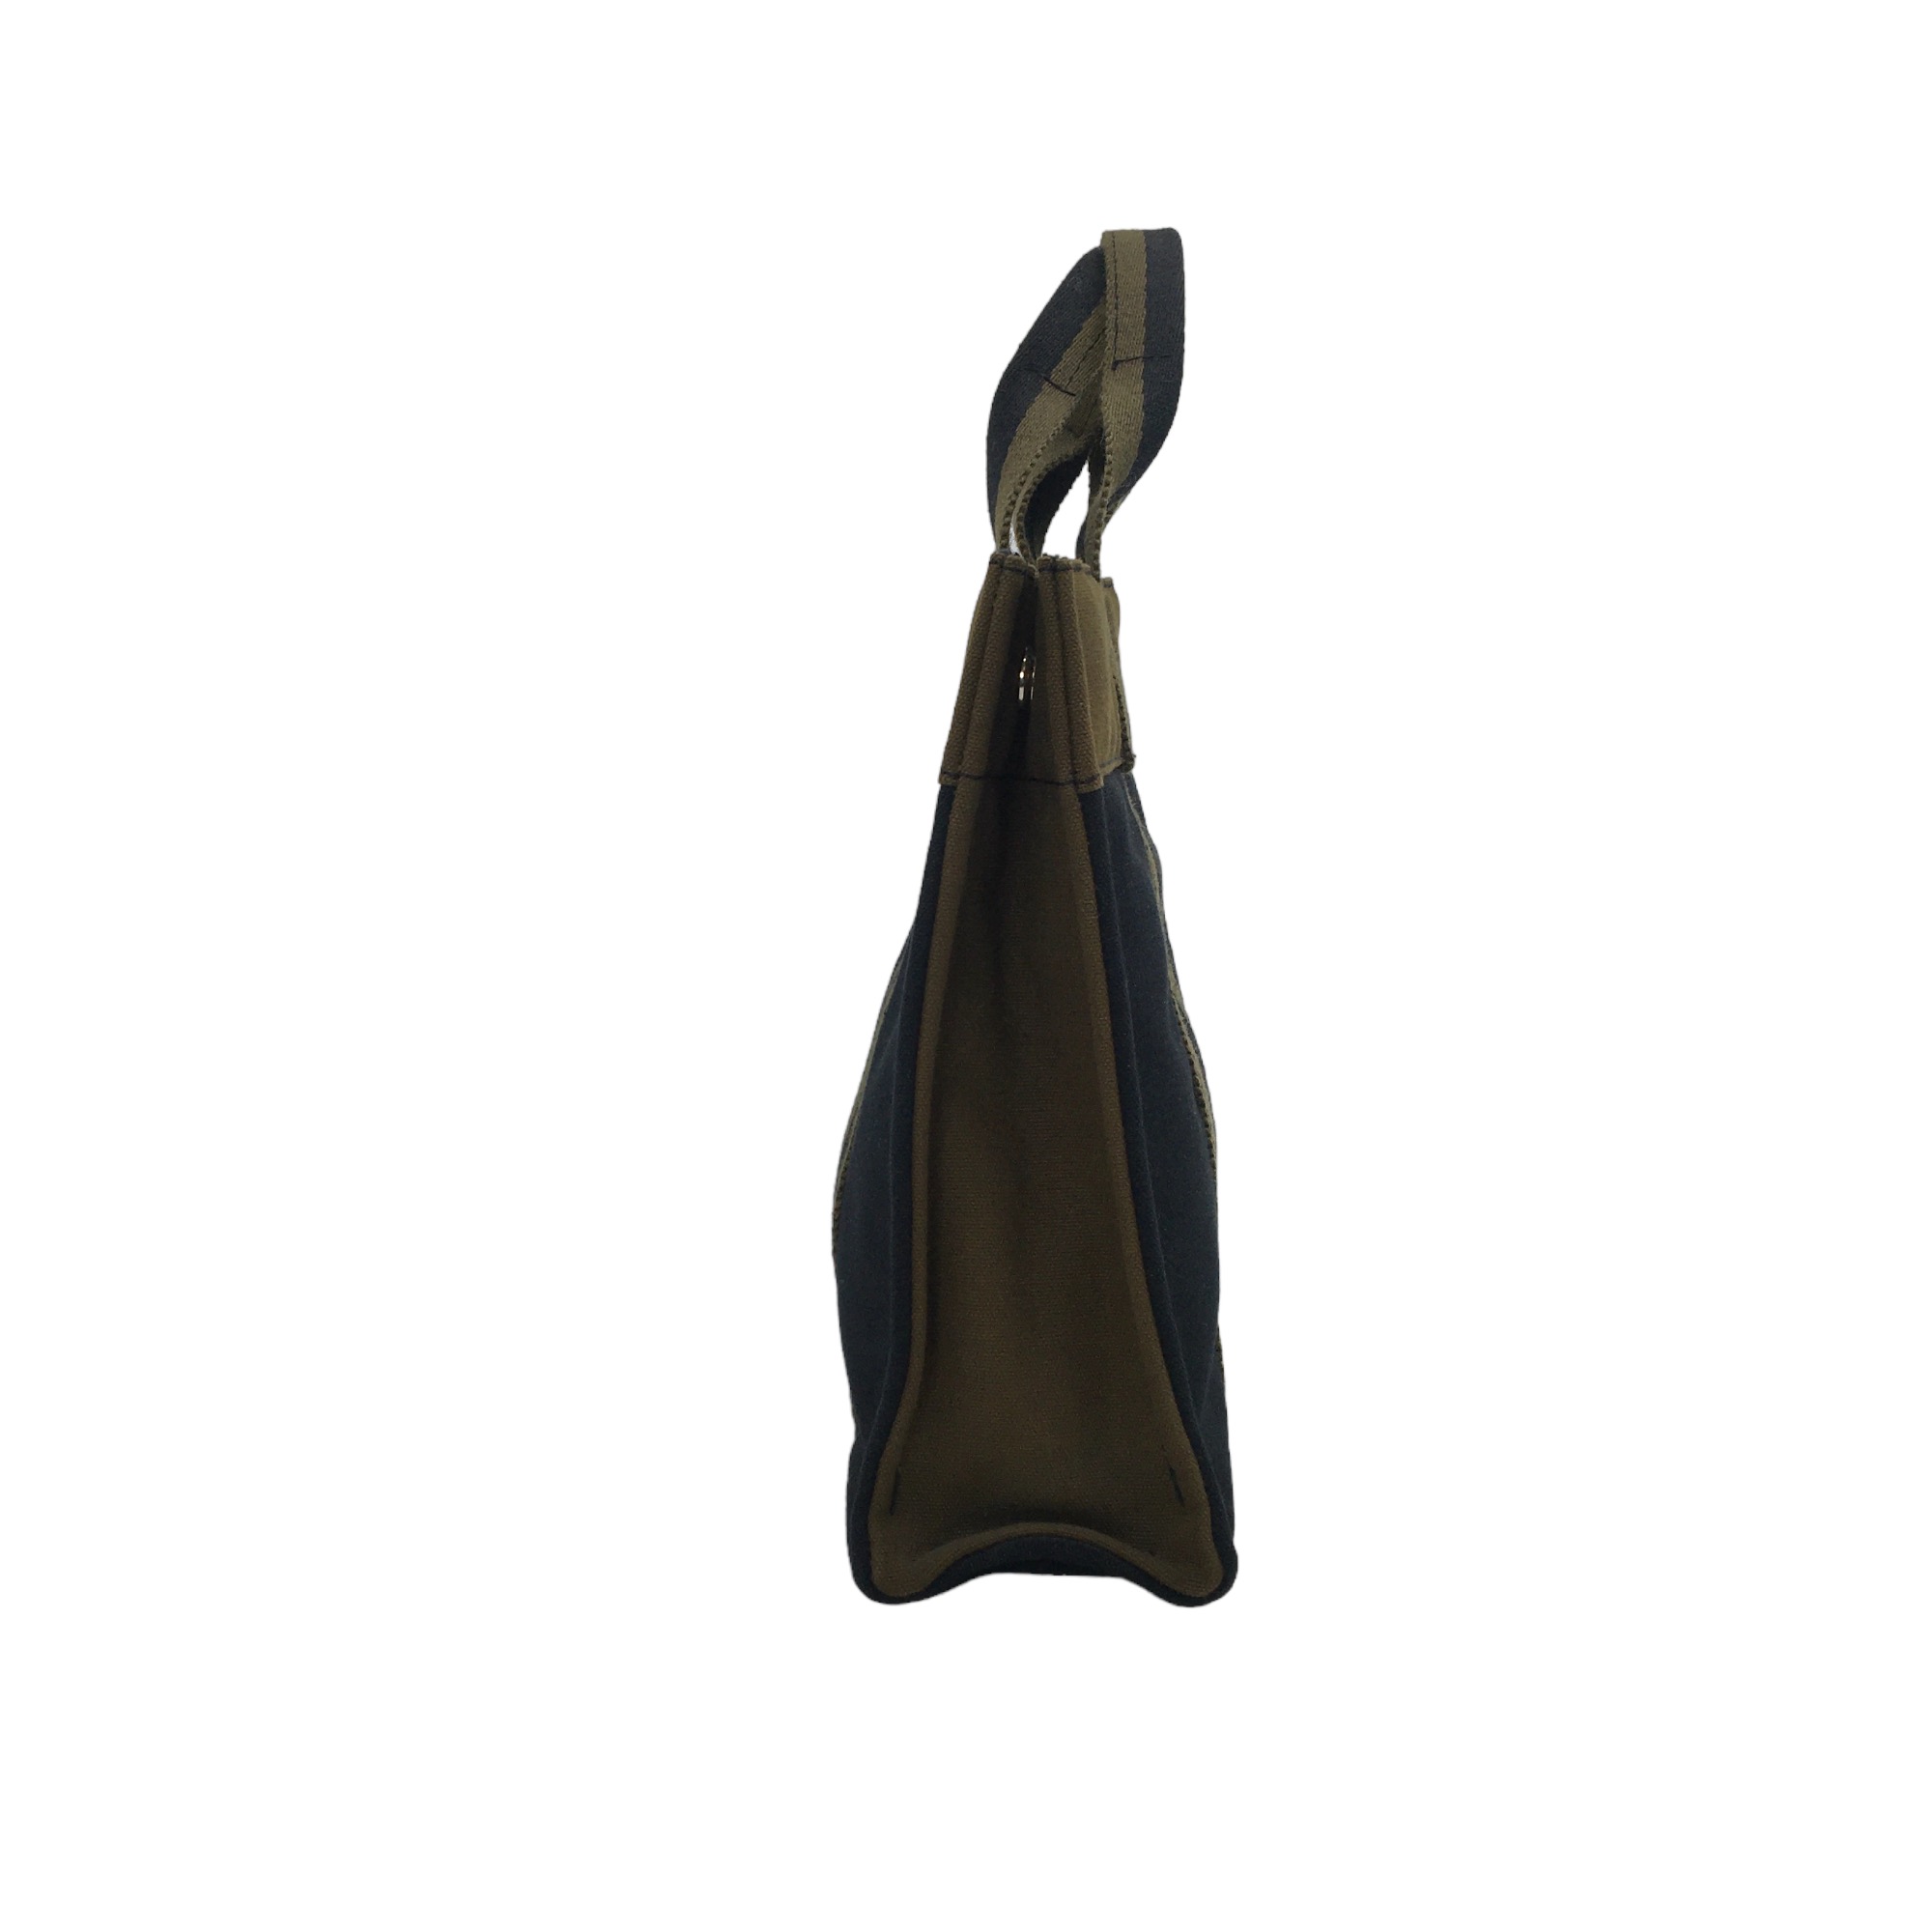 Hermès Herline PM canvas tote bag in black and khaki canvas